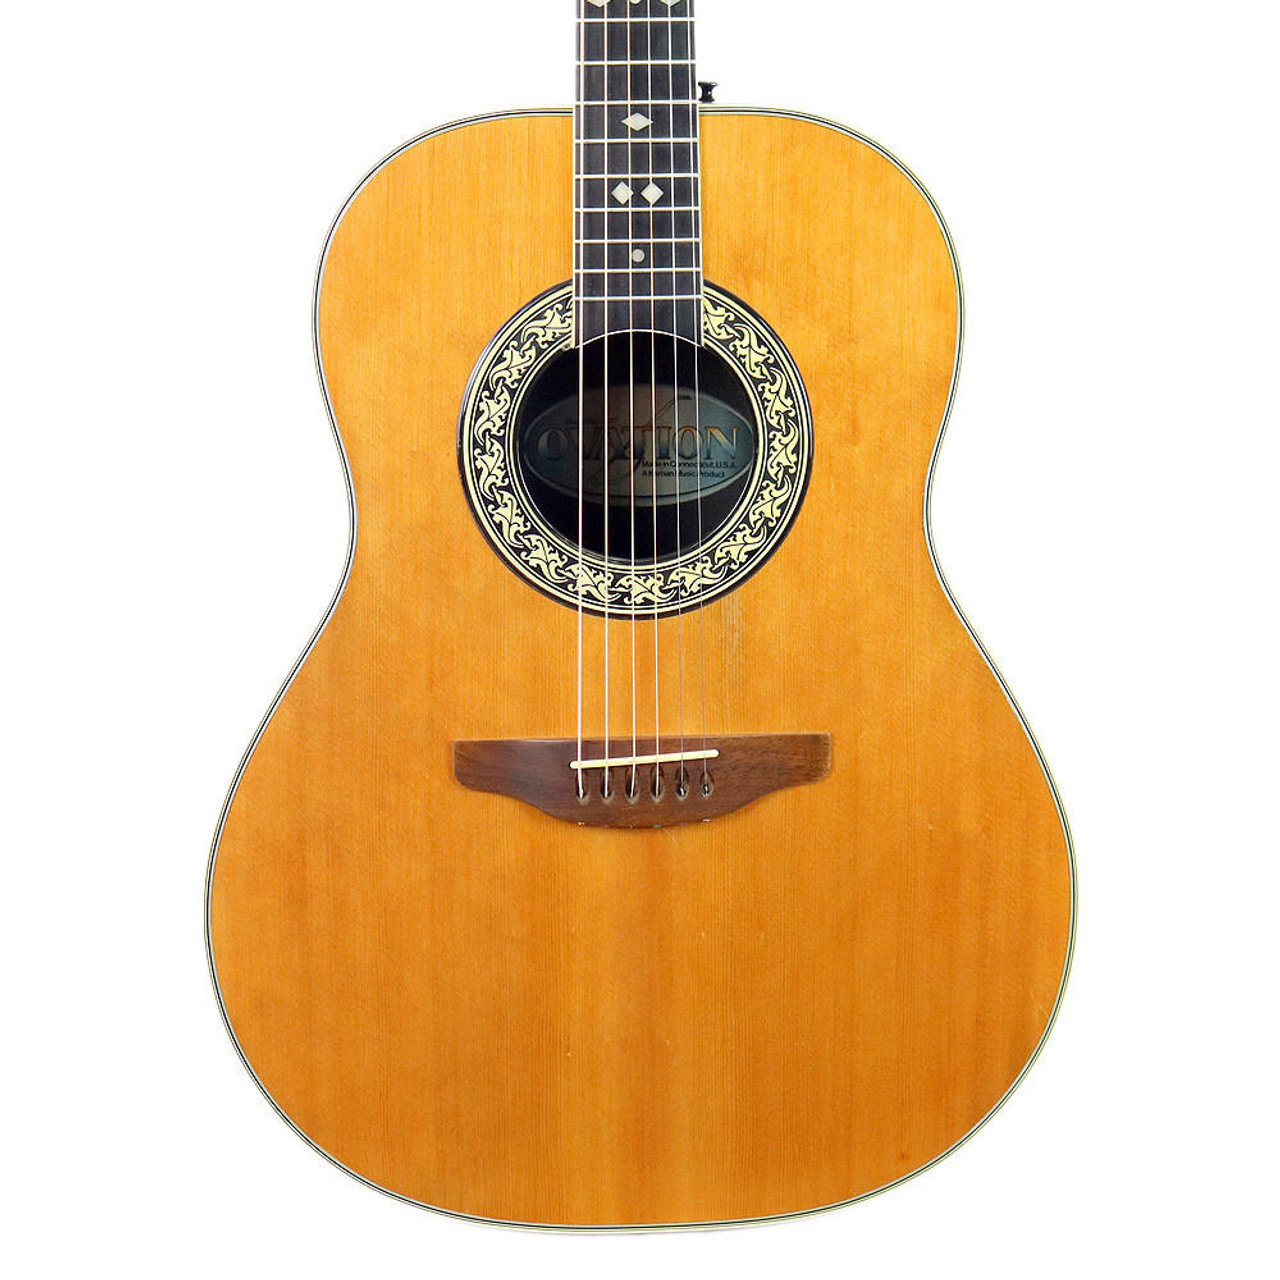 1978 Ovation Model 1127 Glen Campbell Acoustic Guitar in Natural